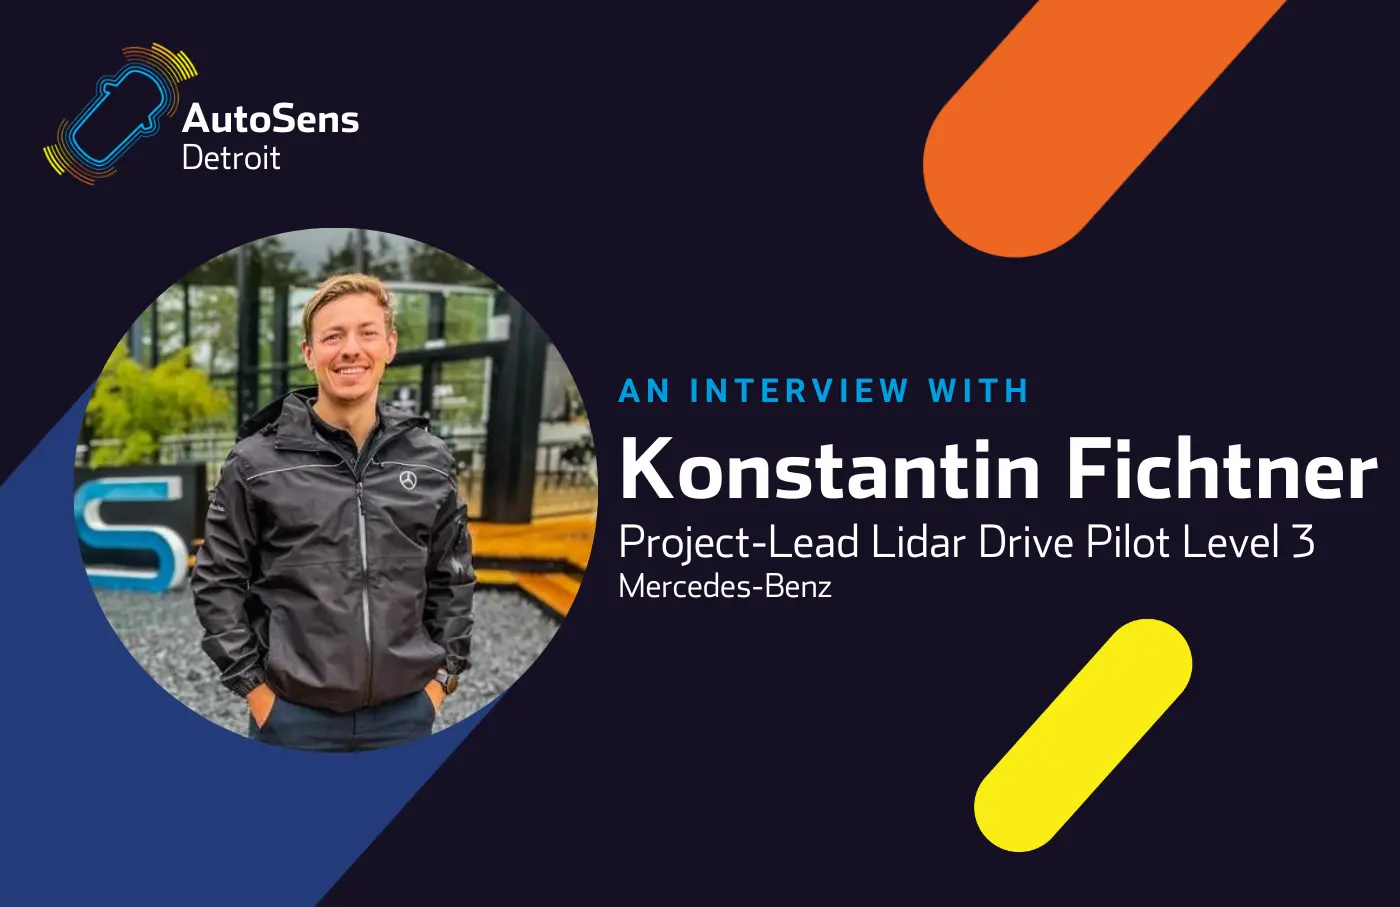 An Interview with Konstantin Fichtner, Project-Lead Lidar Drive Pilot Level 3 at Mercedes-Benz.